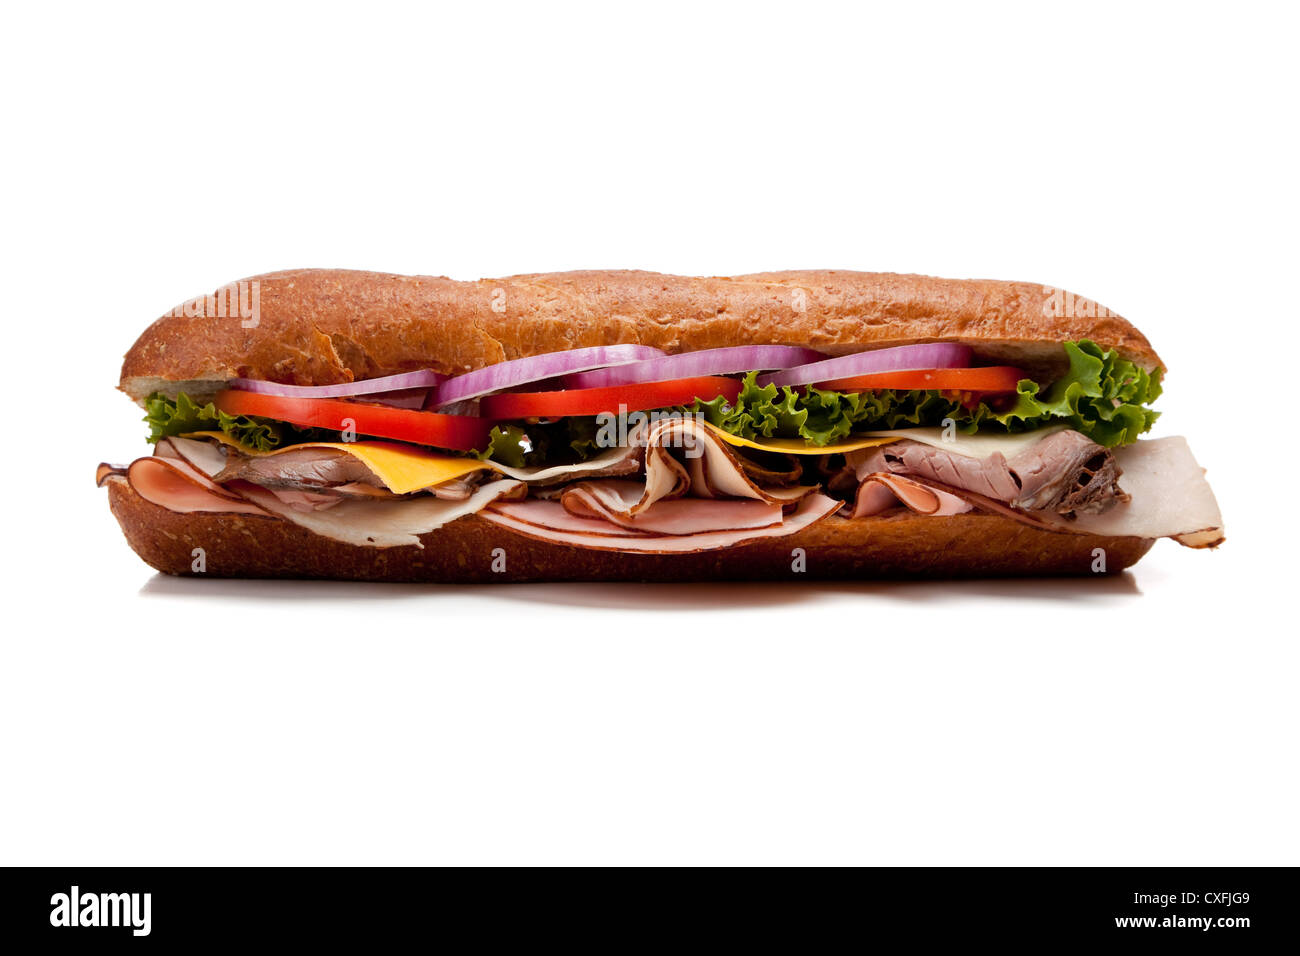 Submarine sandwich on a white background Stock Photo